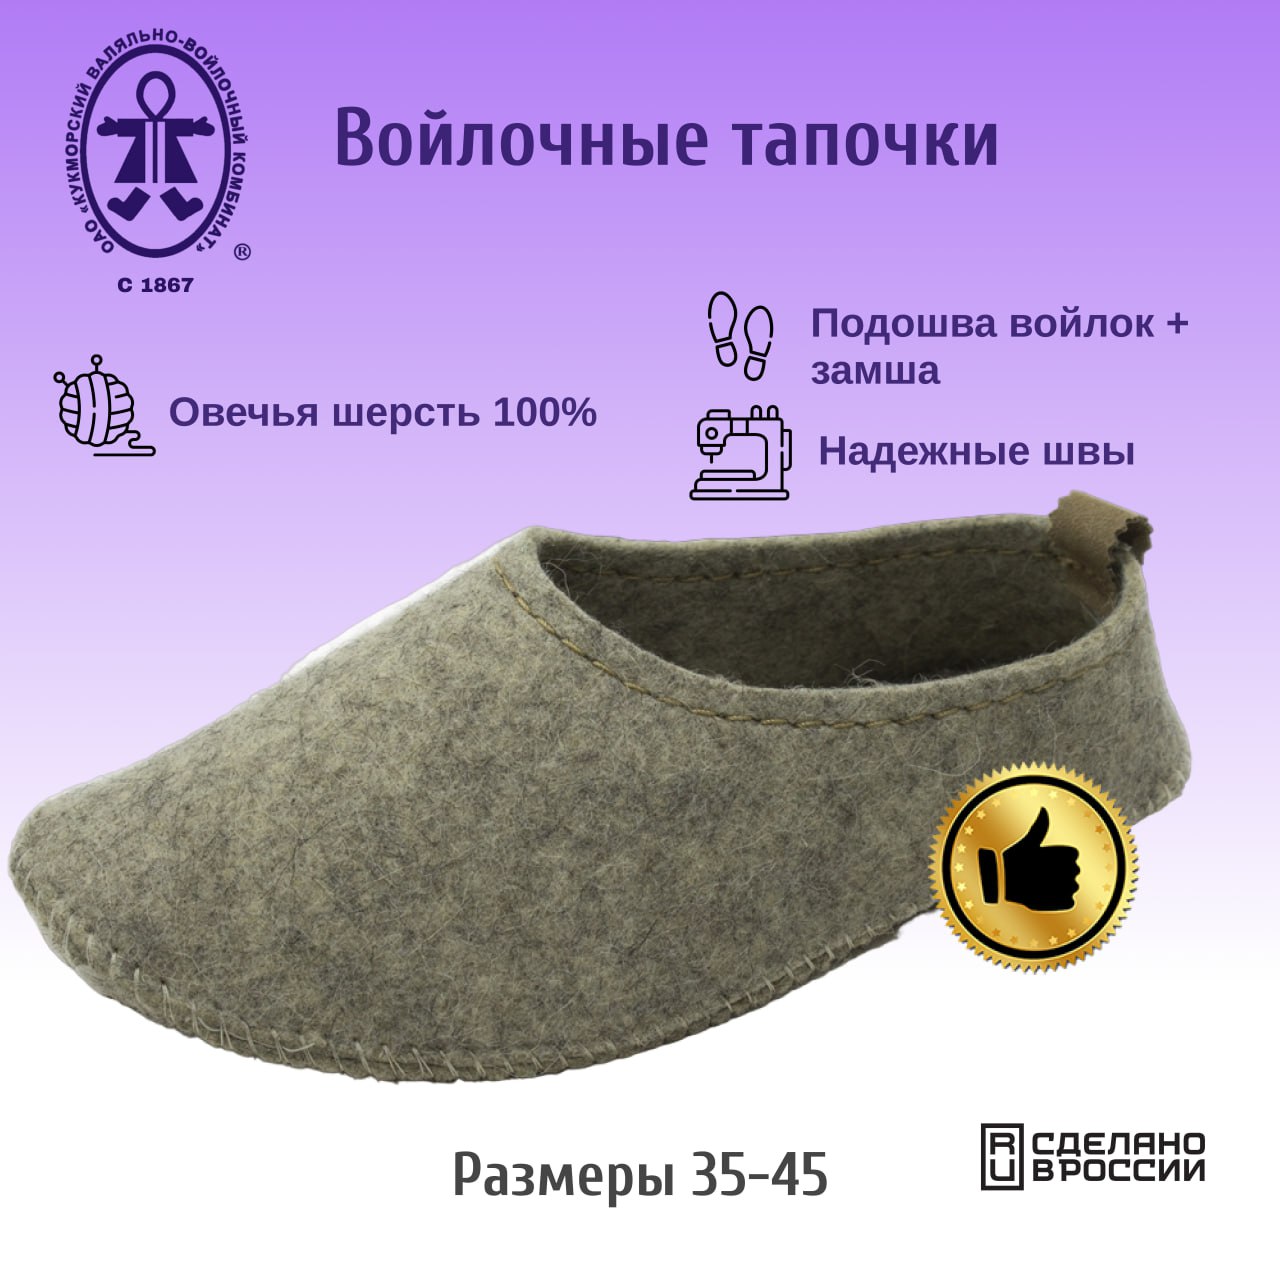 Тапочки Кукморские валенки Т-34-1022 серый, 38